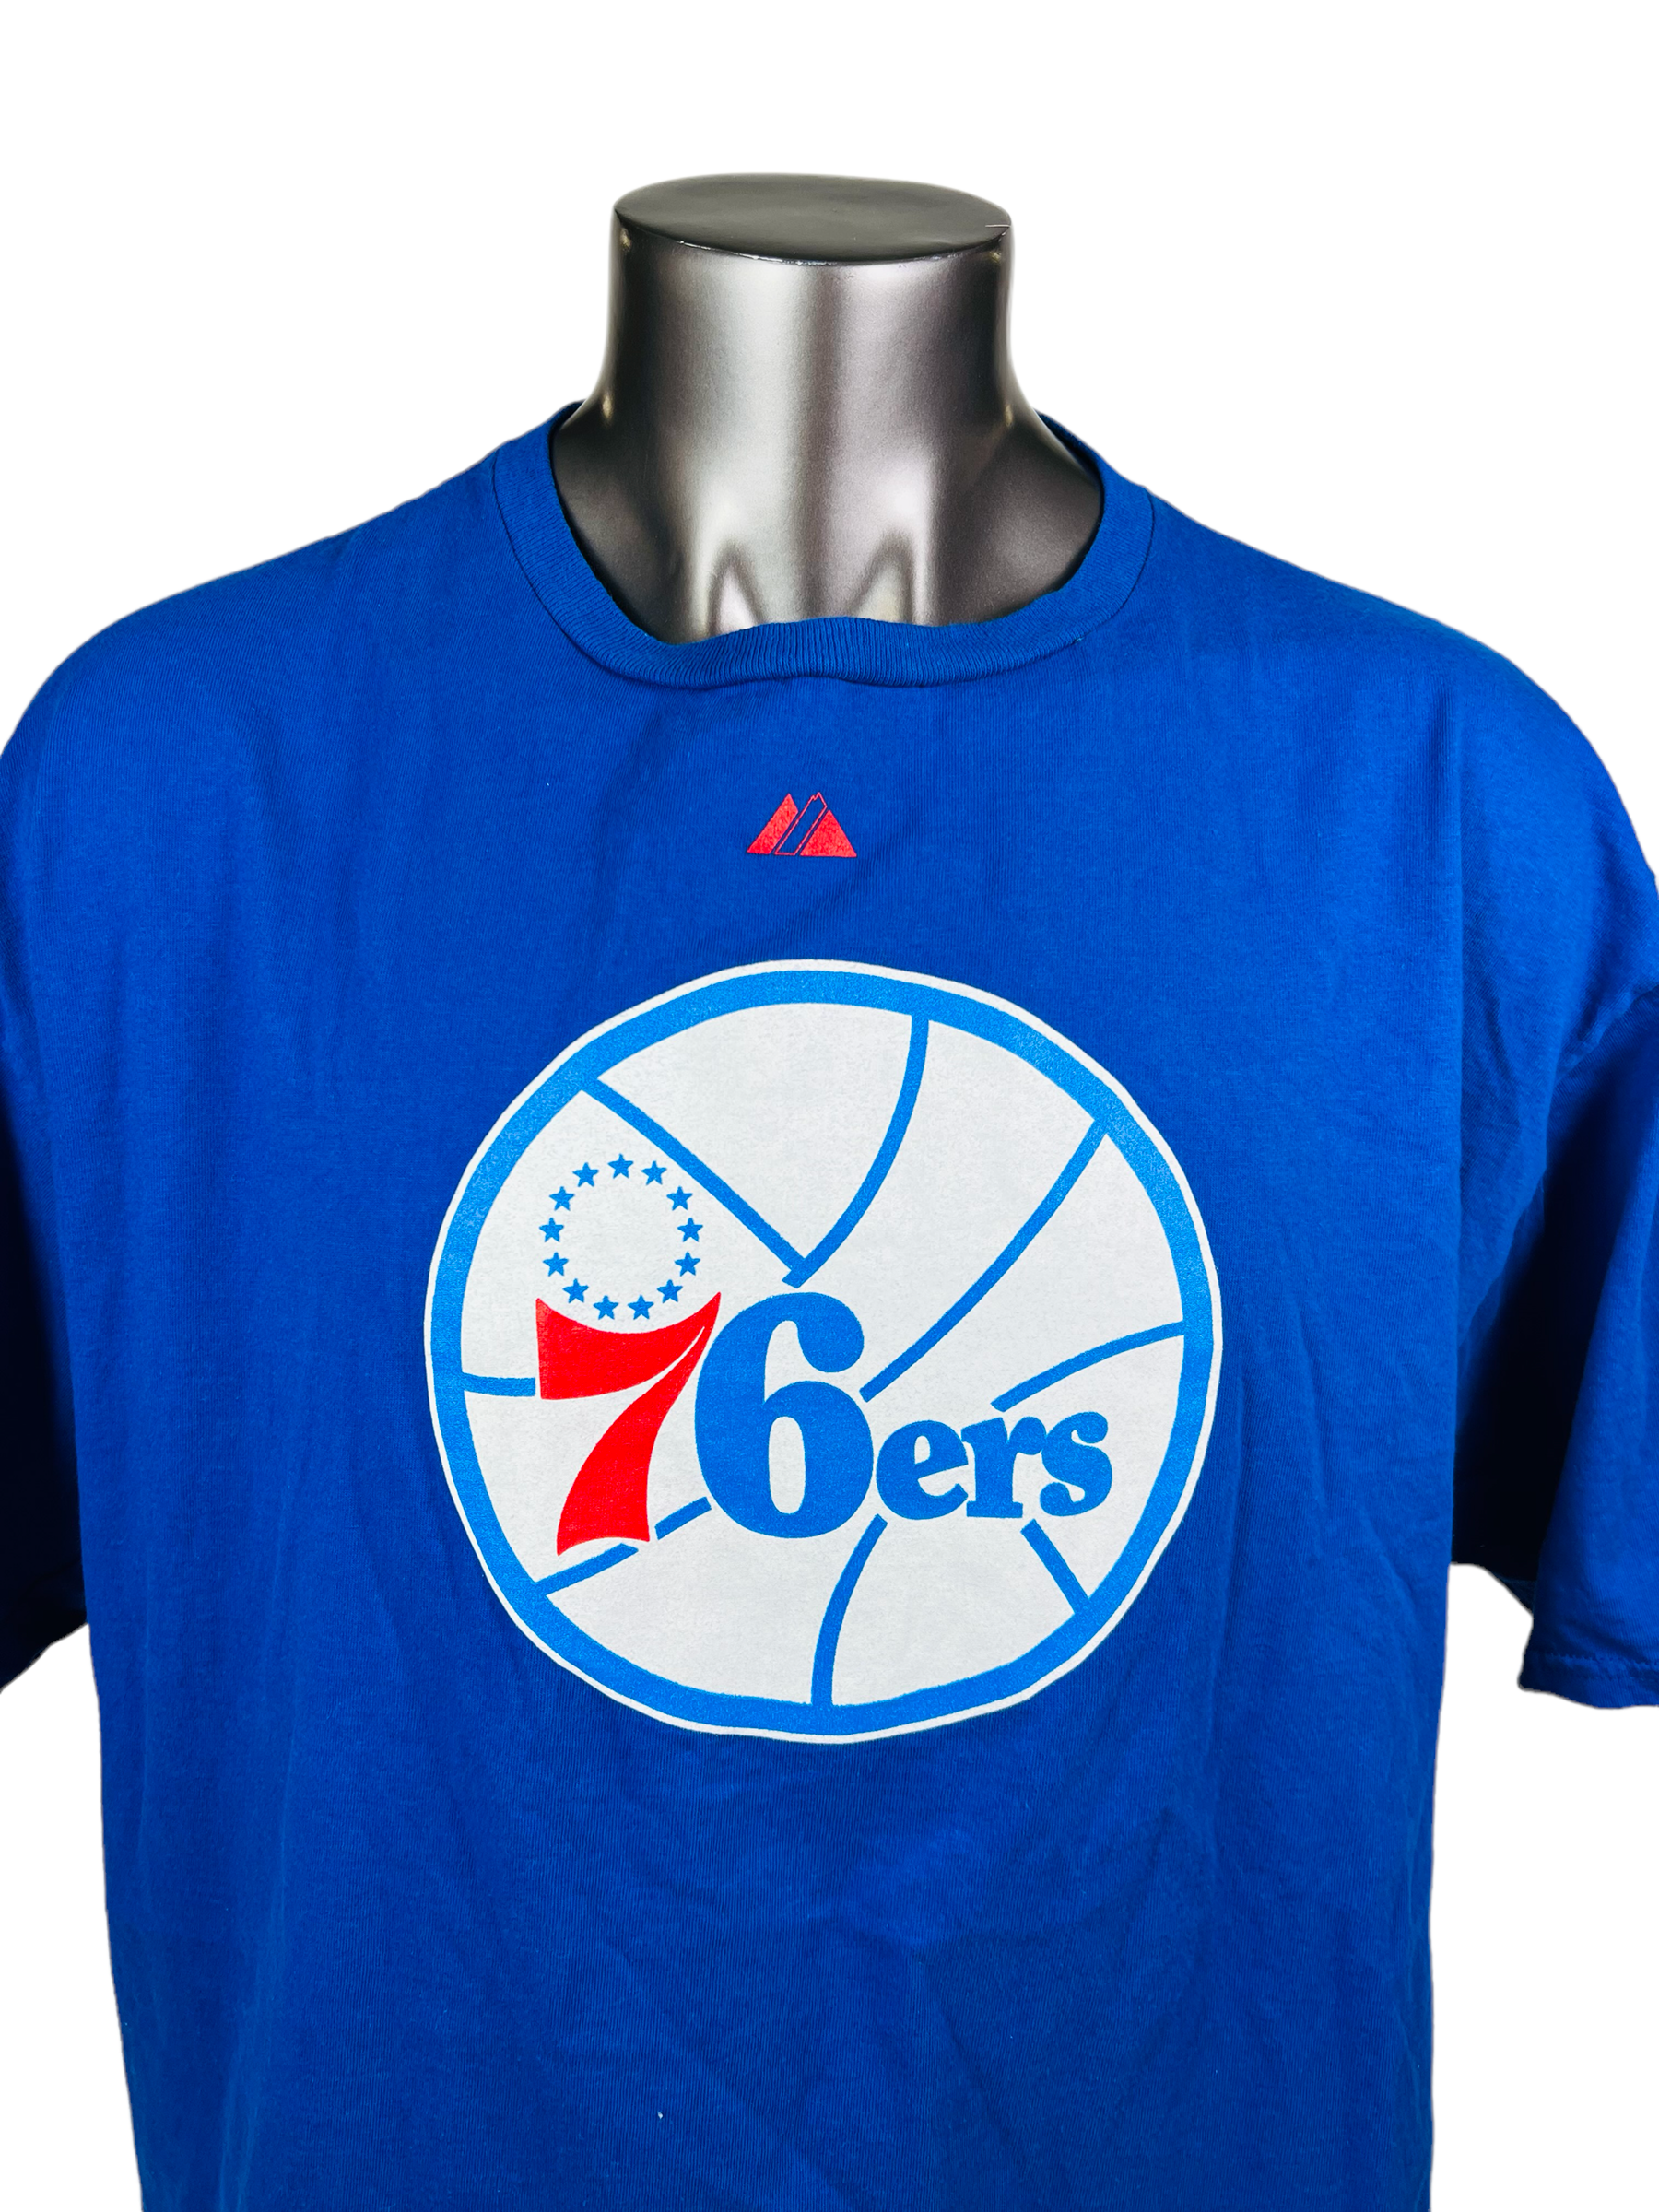 Philadelphia 76ers NBA Playoff gear: How to shop for shirts